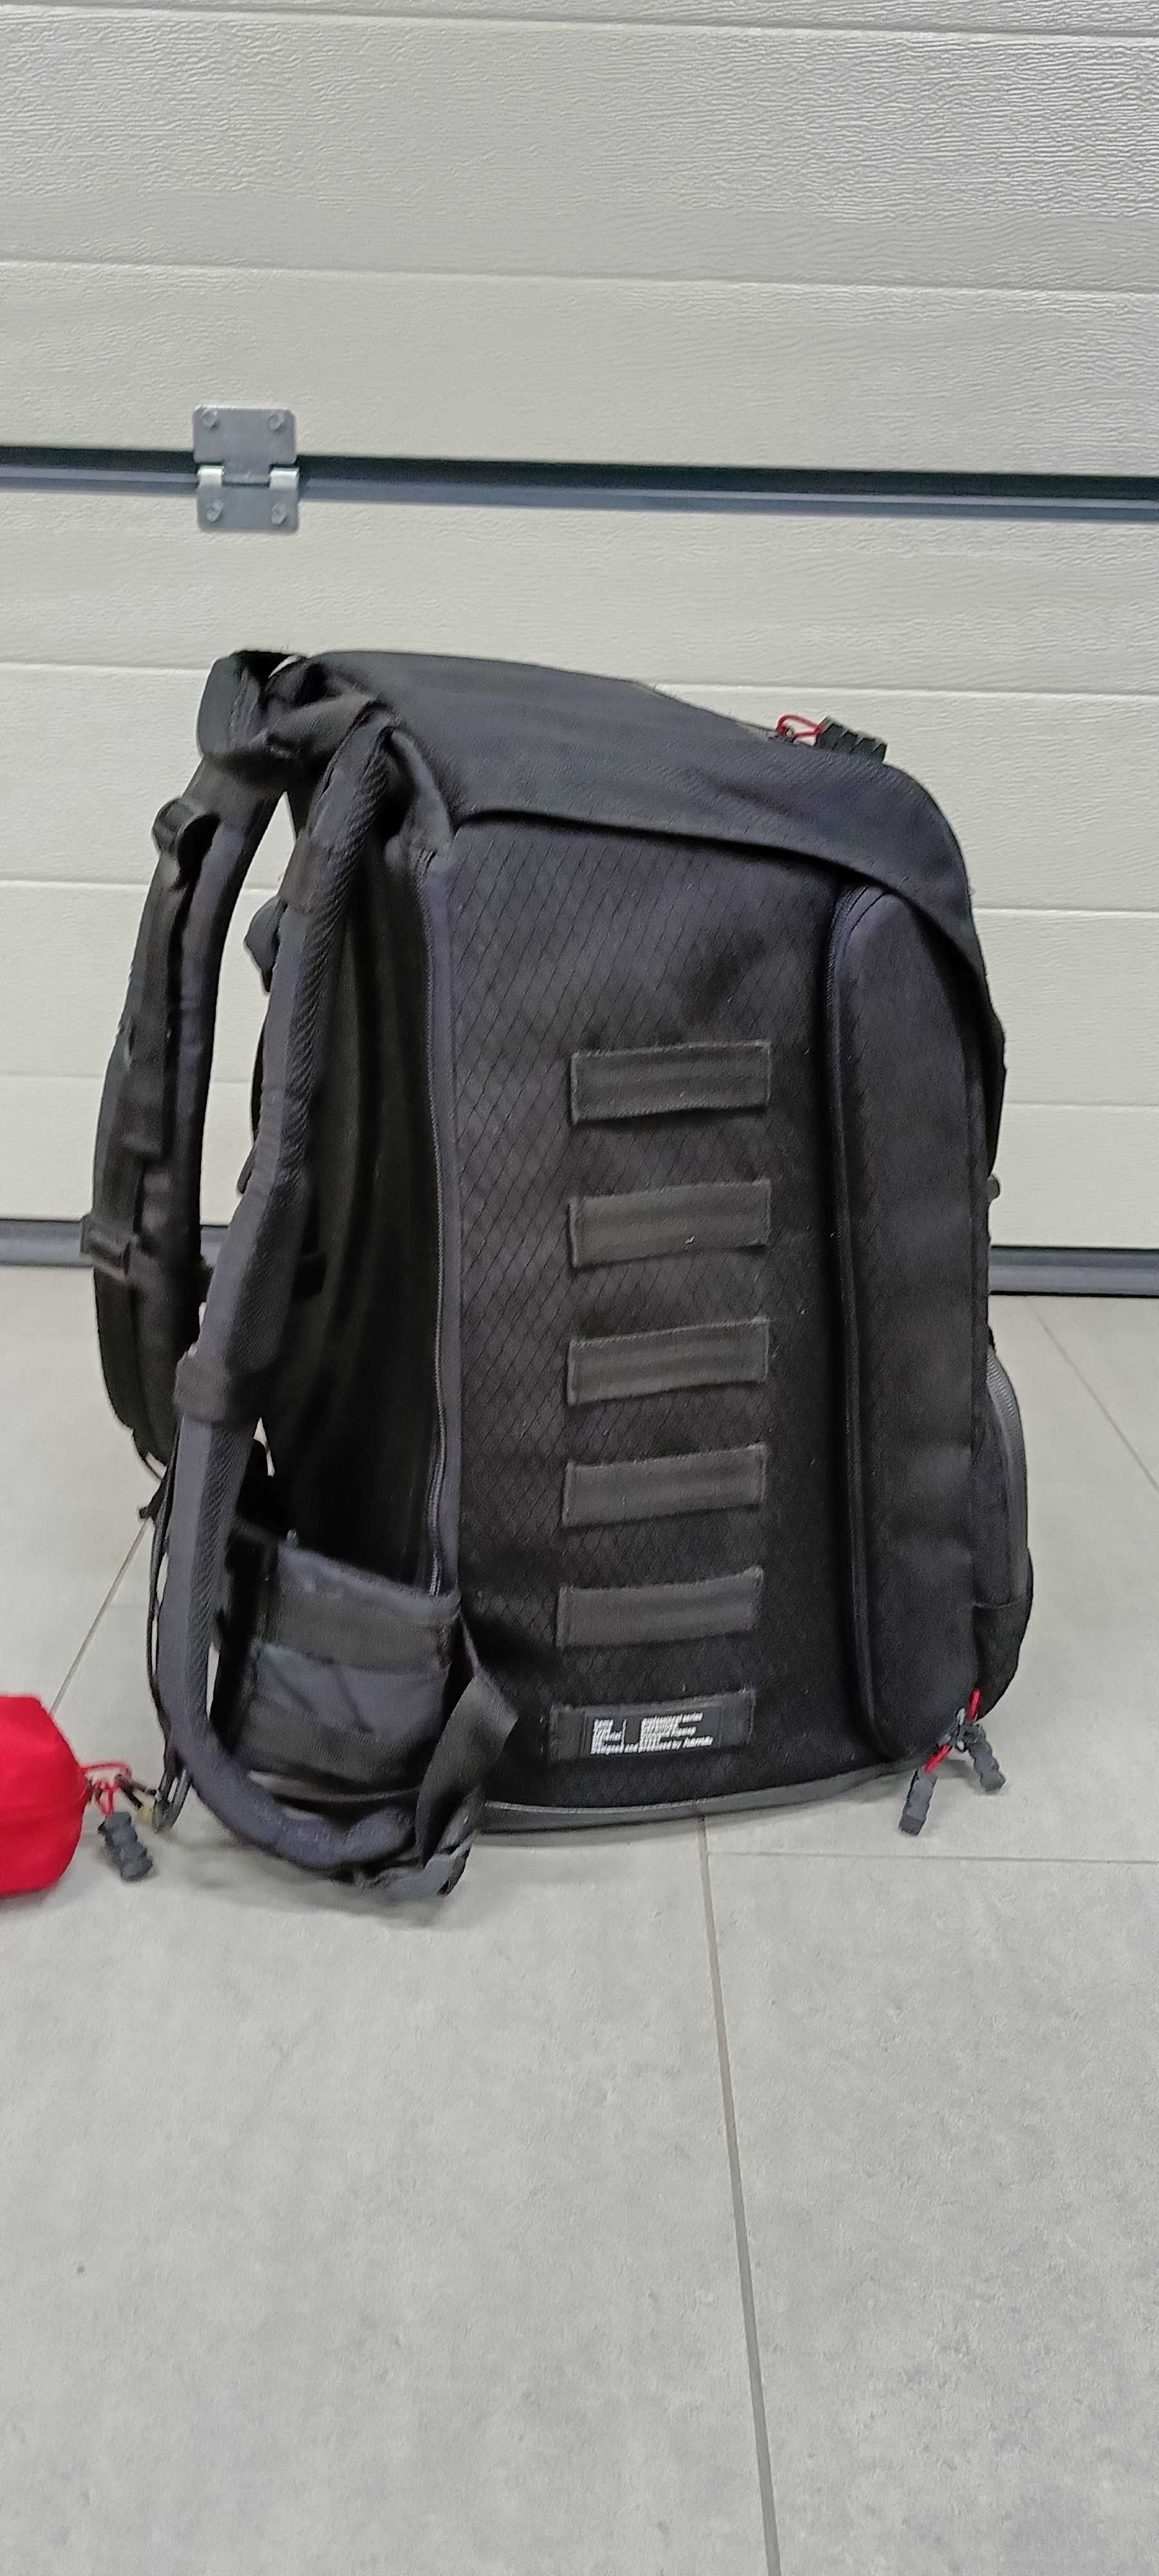 Hama Defender 220 plecak na aparat fotograficzny